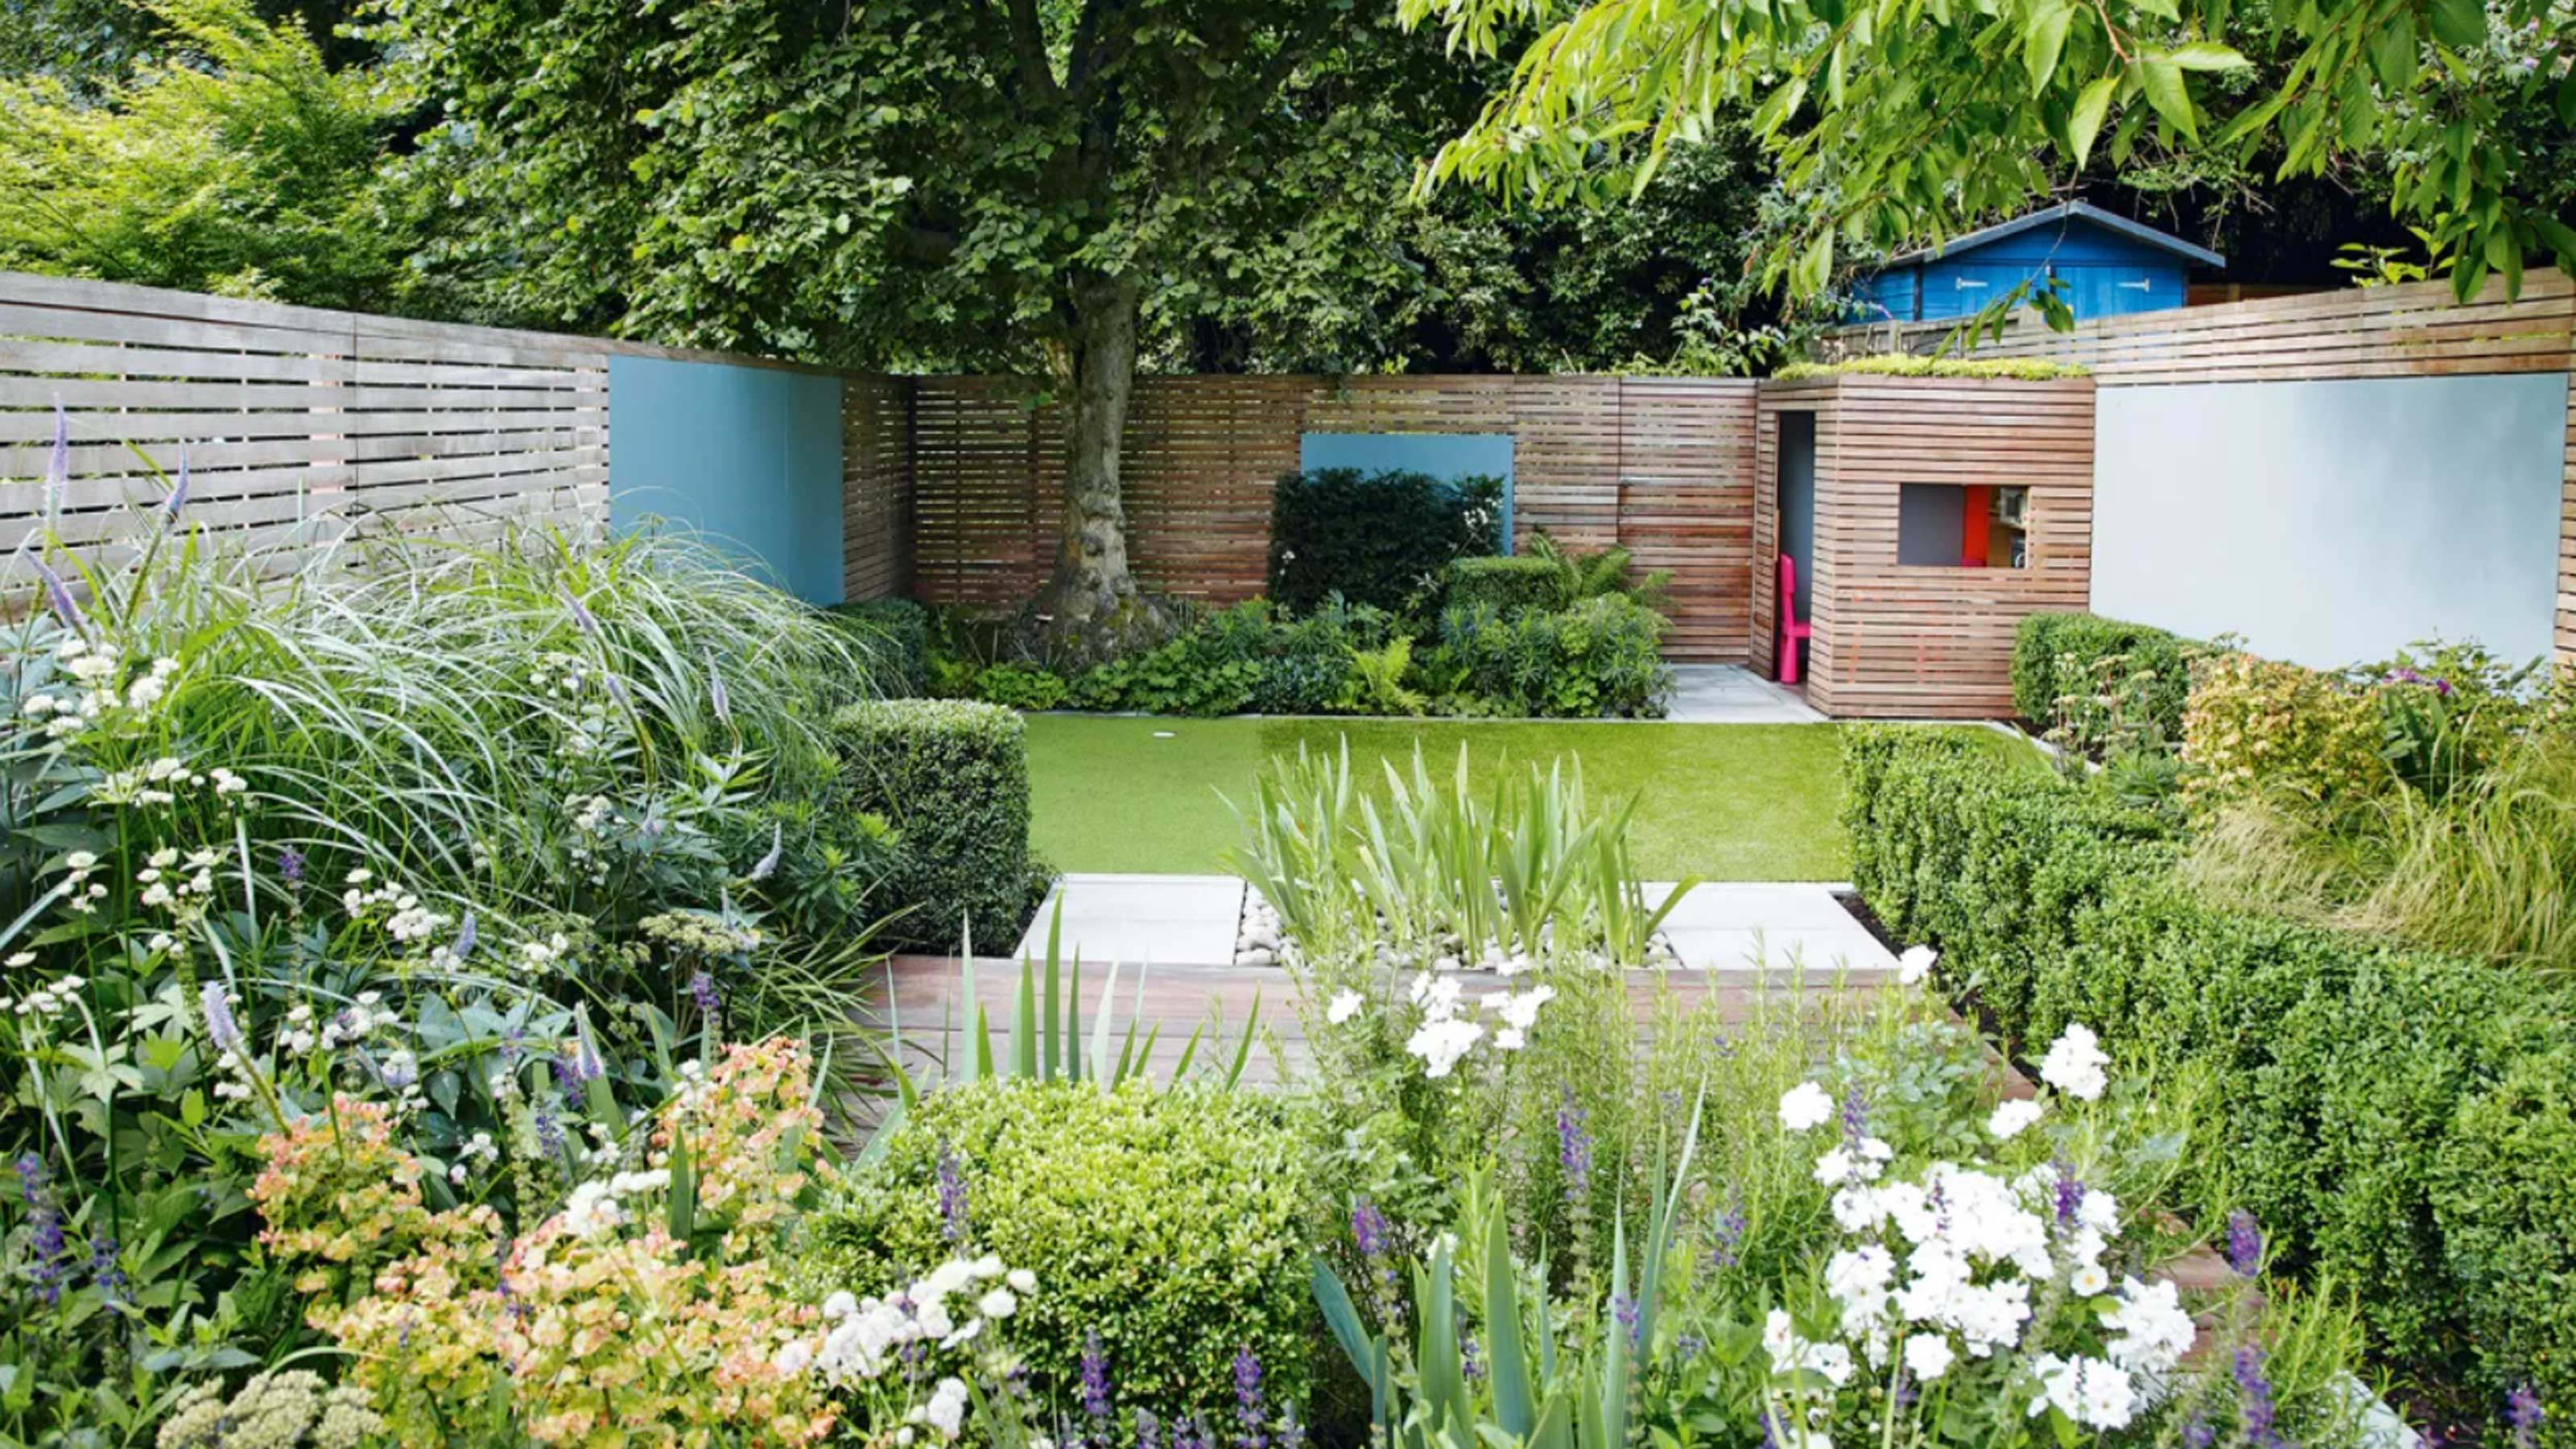  alan titchmarsh garden designs